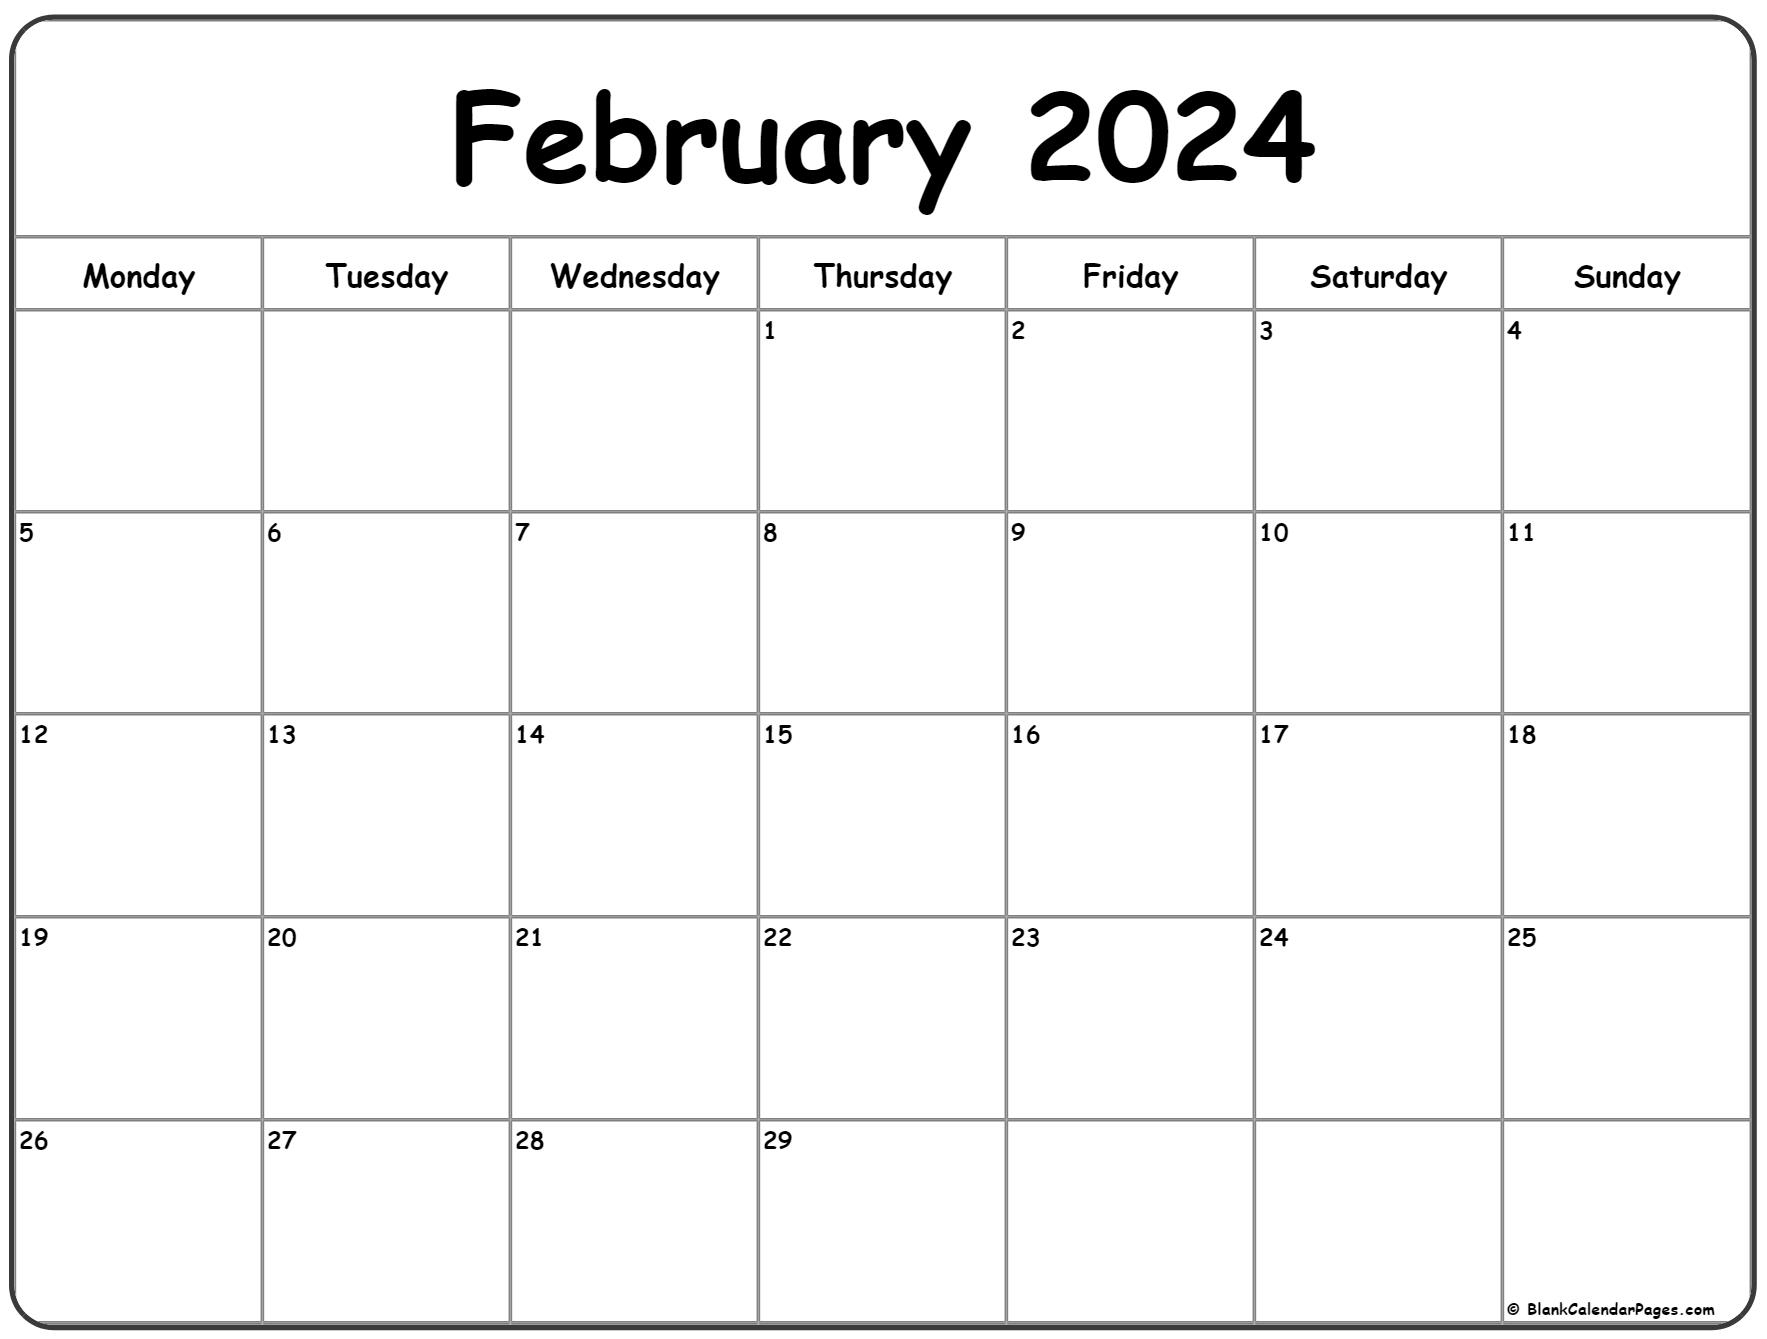 February 2024 Monday Calendar | Monday To Sunday for Feb 2024 Printable Calendar